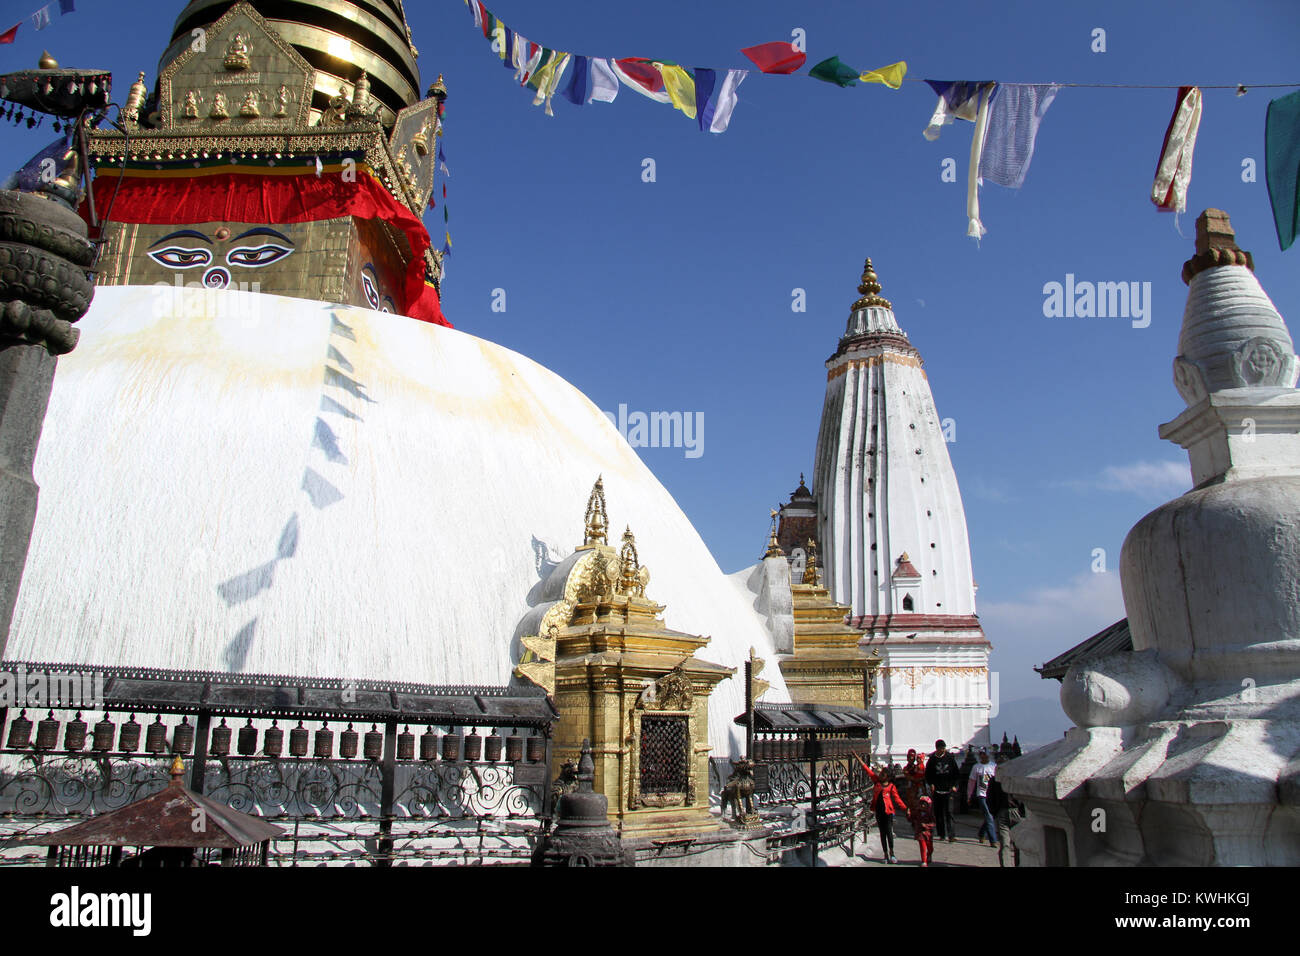 La gente a piedi attorno a Swayambhunath Stupa di Kathmandu in Nepal Foto Stock